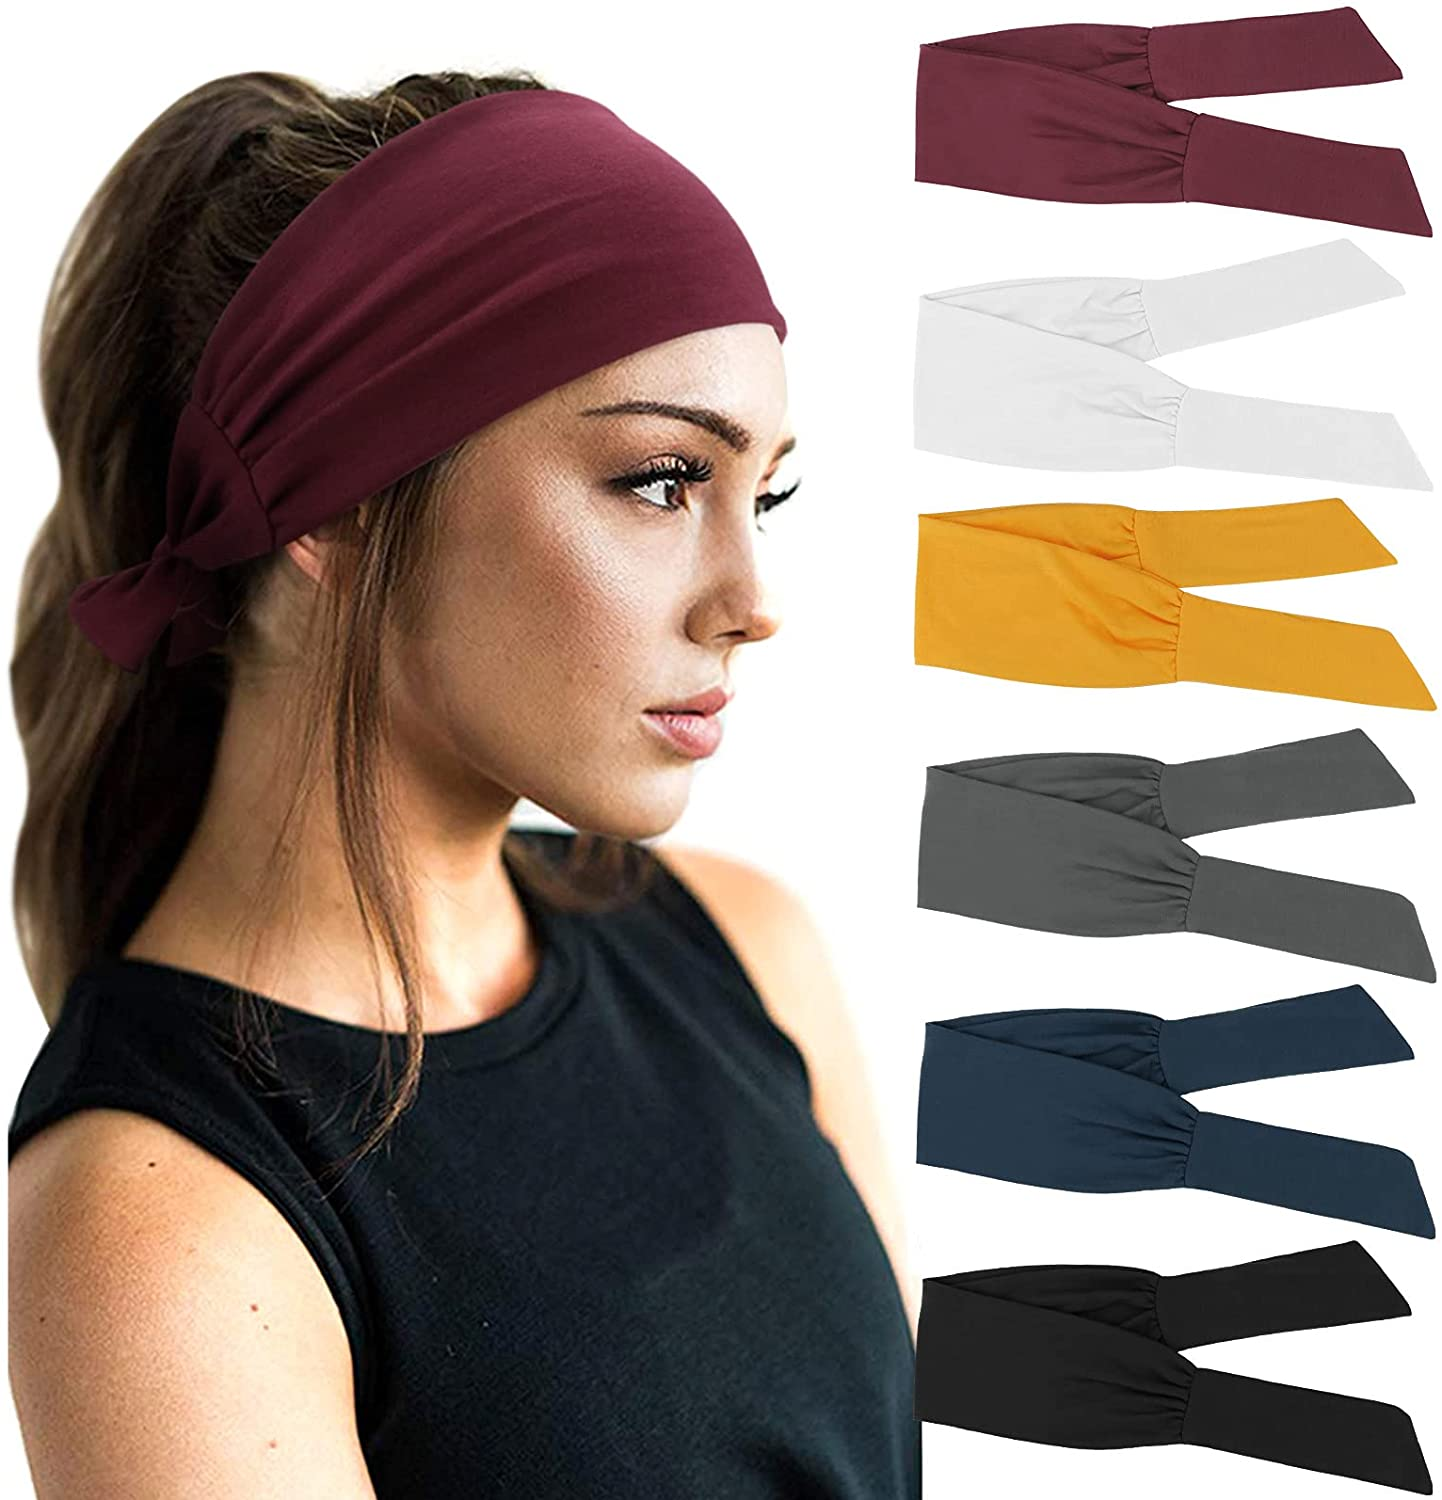 6 PCS Adjustable Headbands for Women Knotted Headbands Cotton Elastic